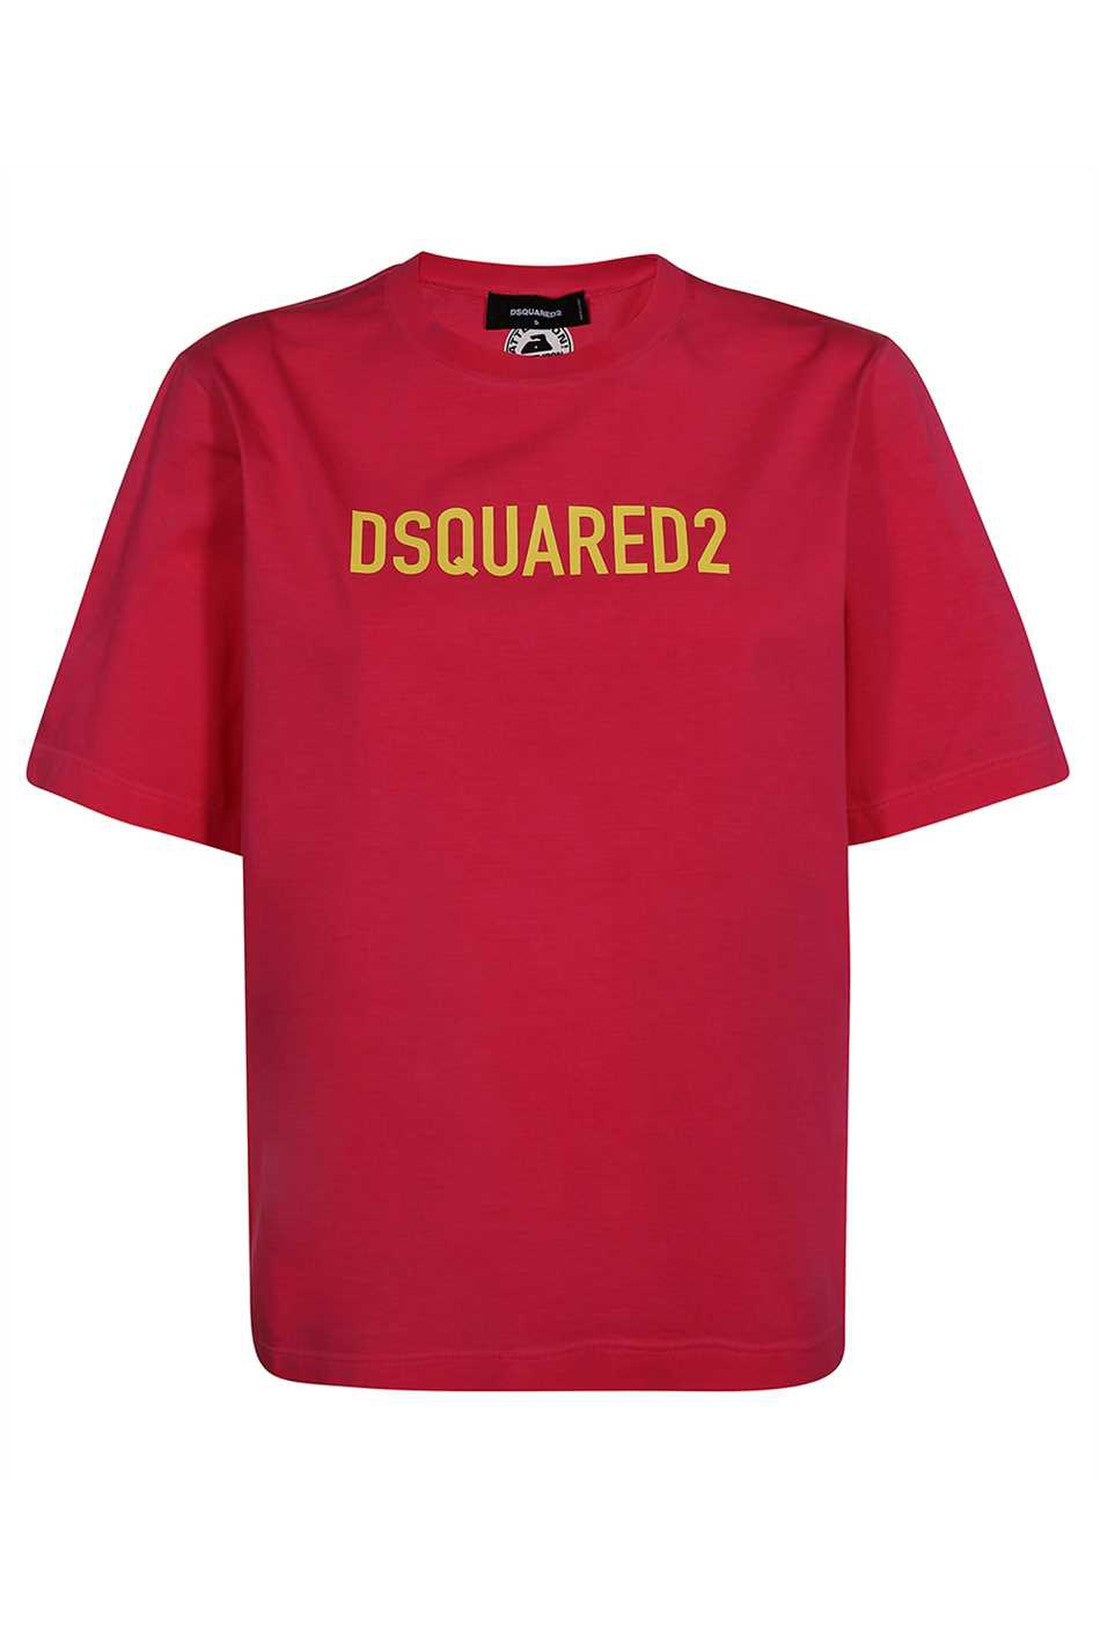 Dsquared2-OUTLET-SALE-Crew-neck-t-shirt-Shirts-L-ARCHIVE-COLLECTION_3d6f668a-29a6-48f8-8900-884827ba5091.jpg